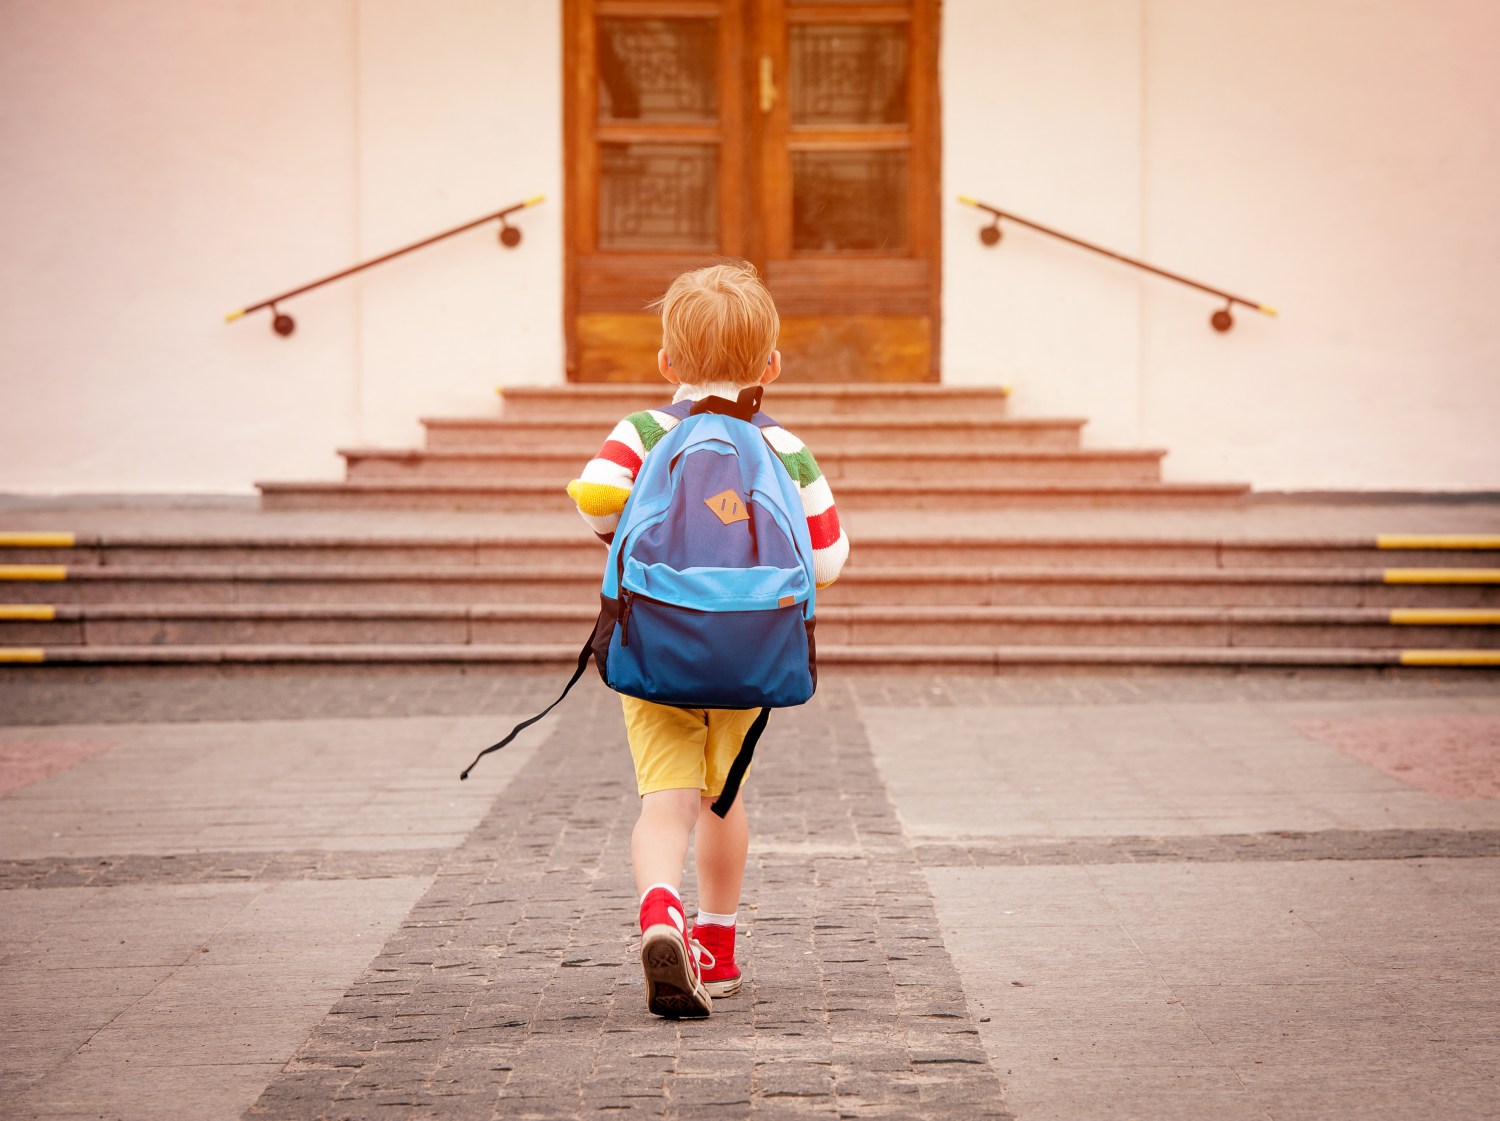 Child enters school